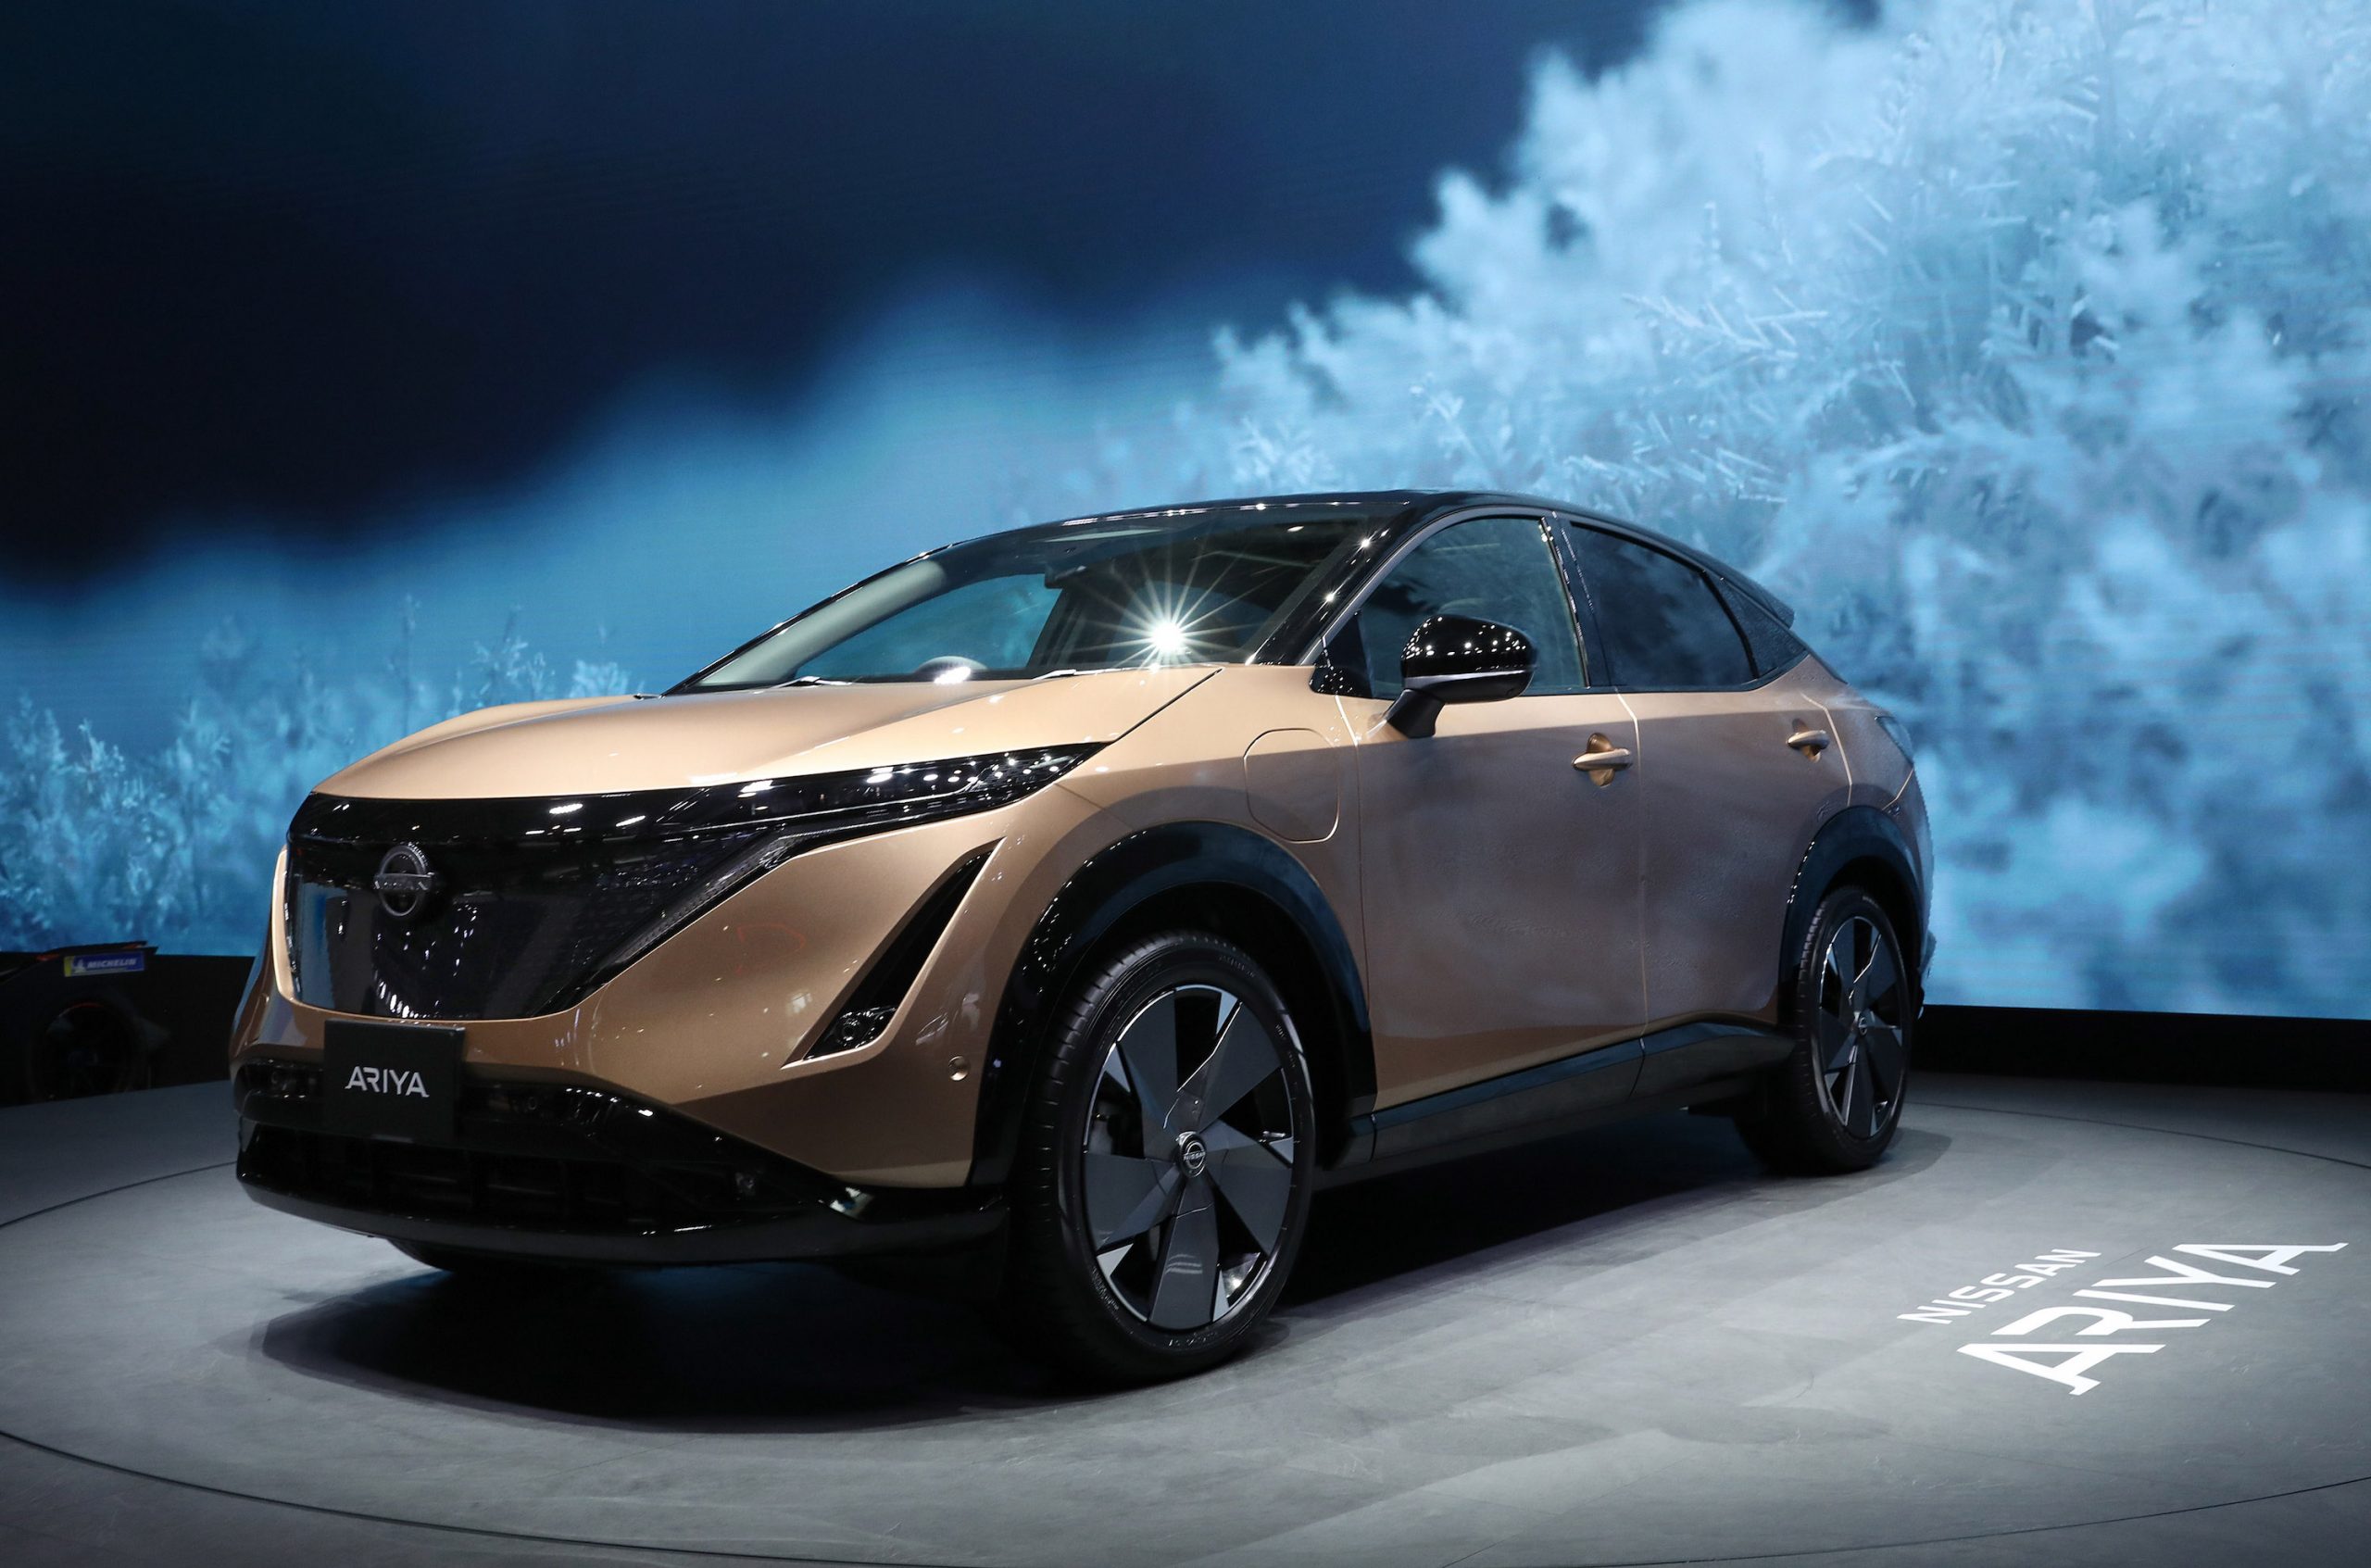 A Nissan Ariya electric car is on display during 2020 Beijing International Automotive Exhibition